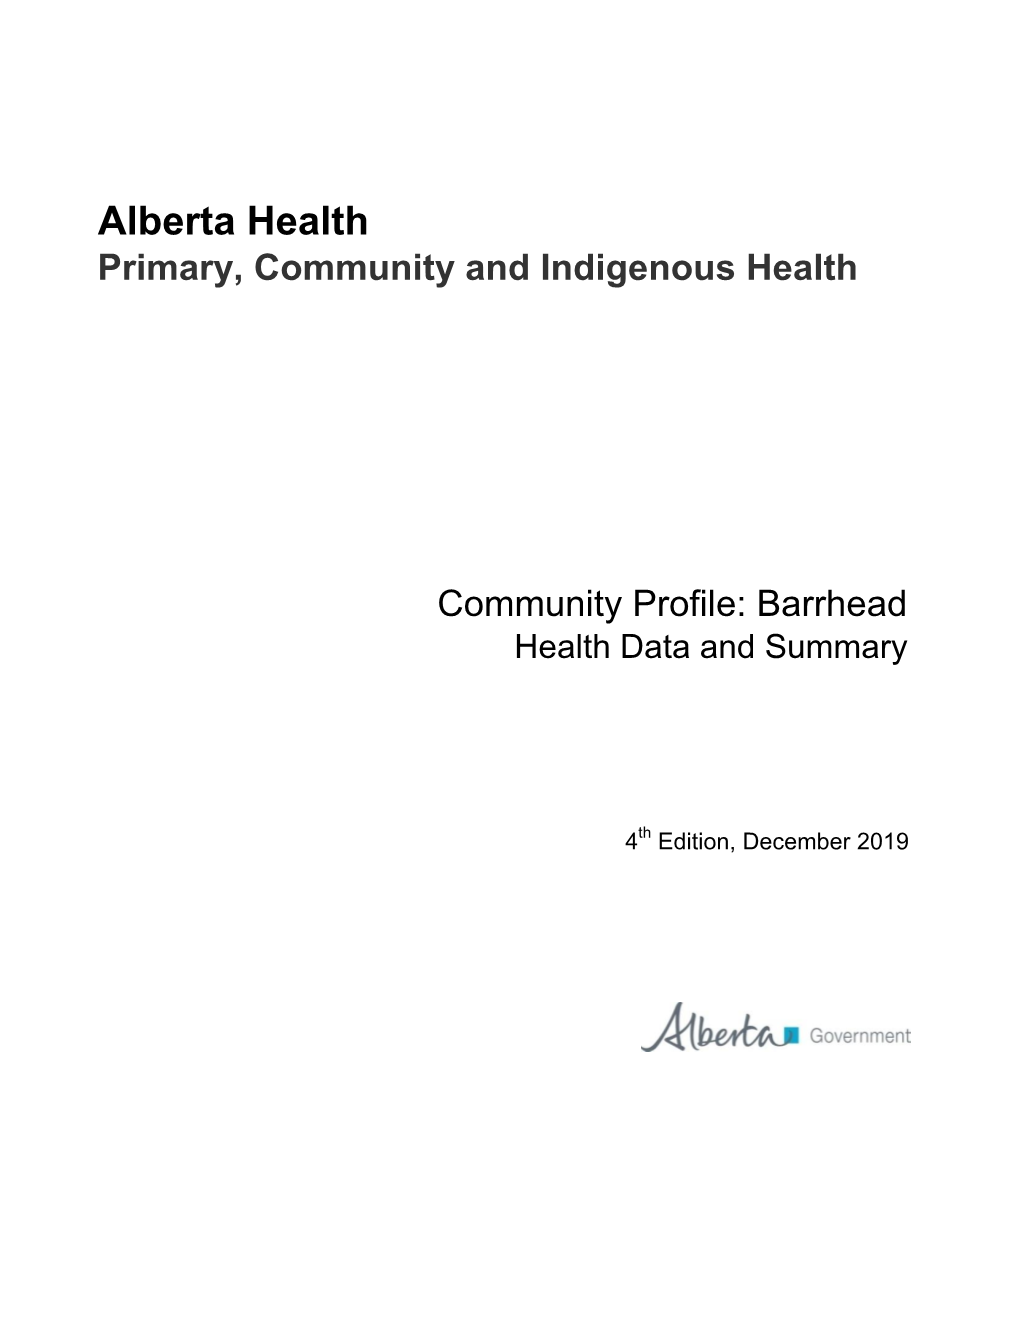 Community Profile: Barrhead Health Data and Summary. 4Th Edition